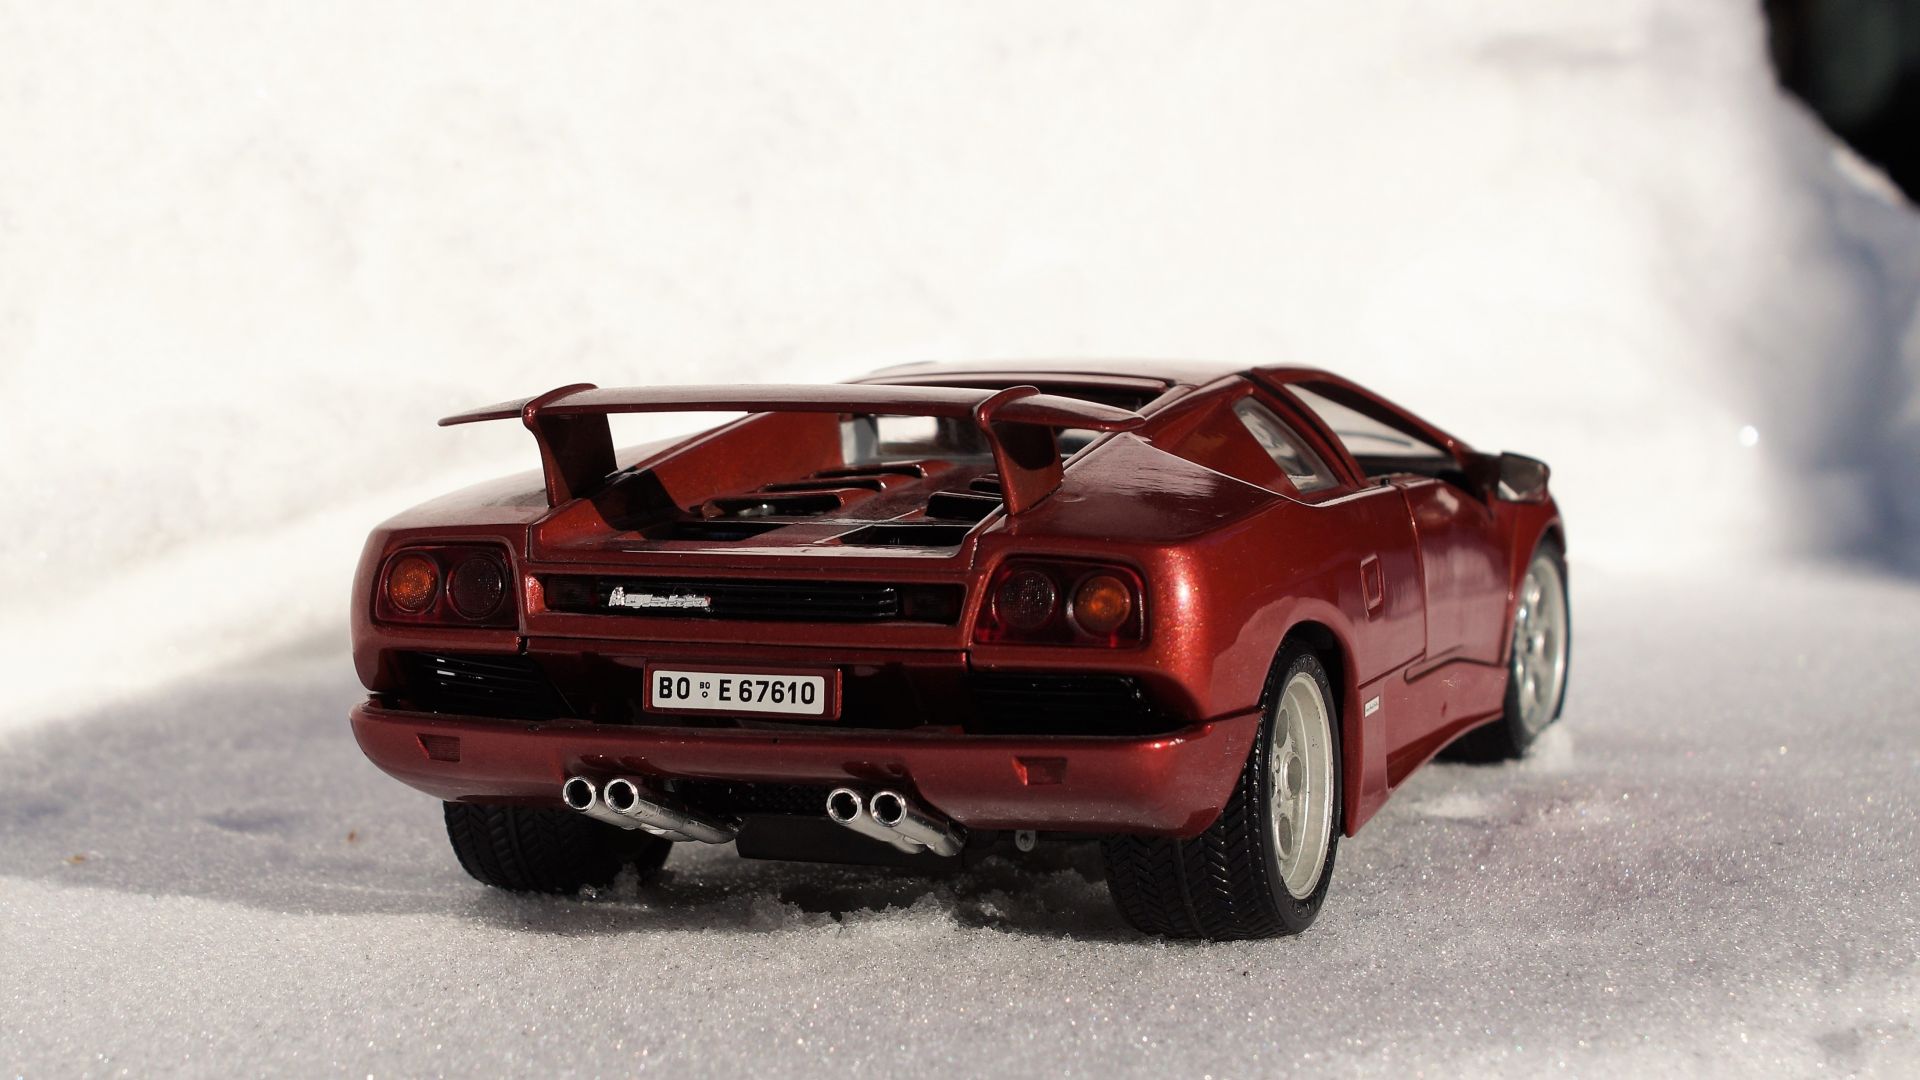 Wallpaper Model Car, Lamborghini rear view, toys